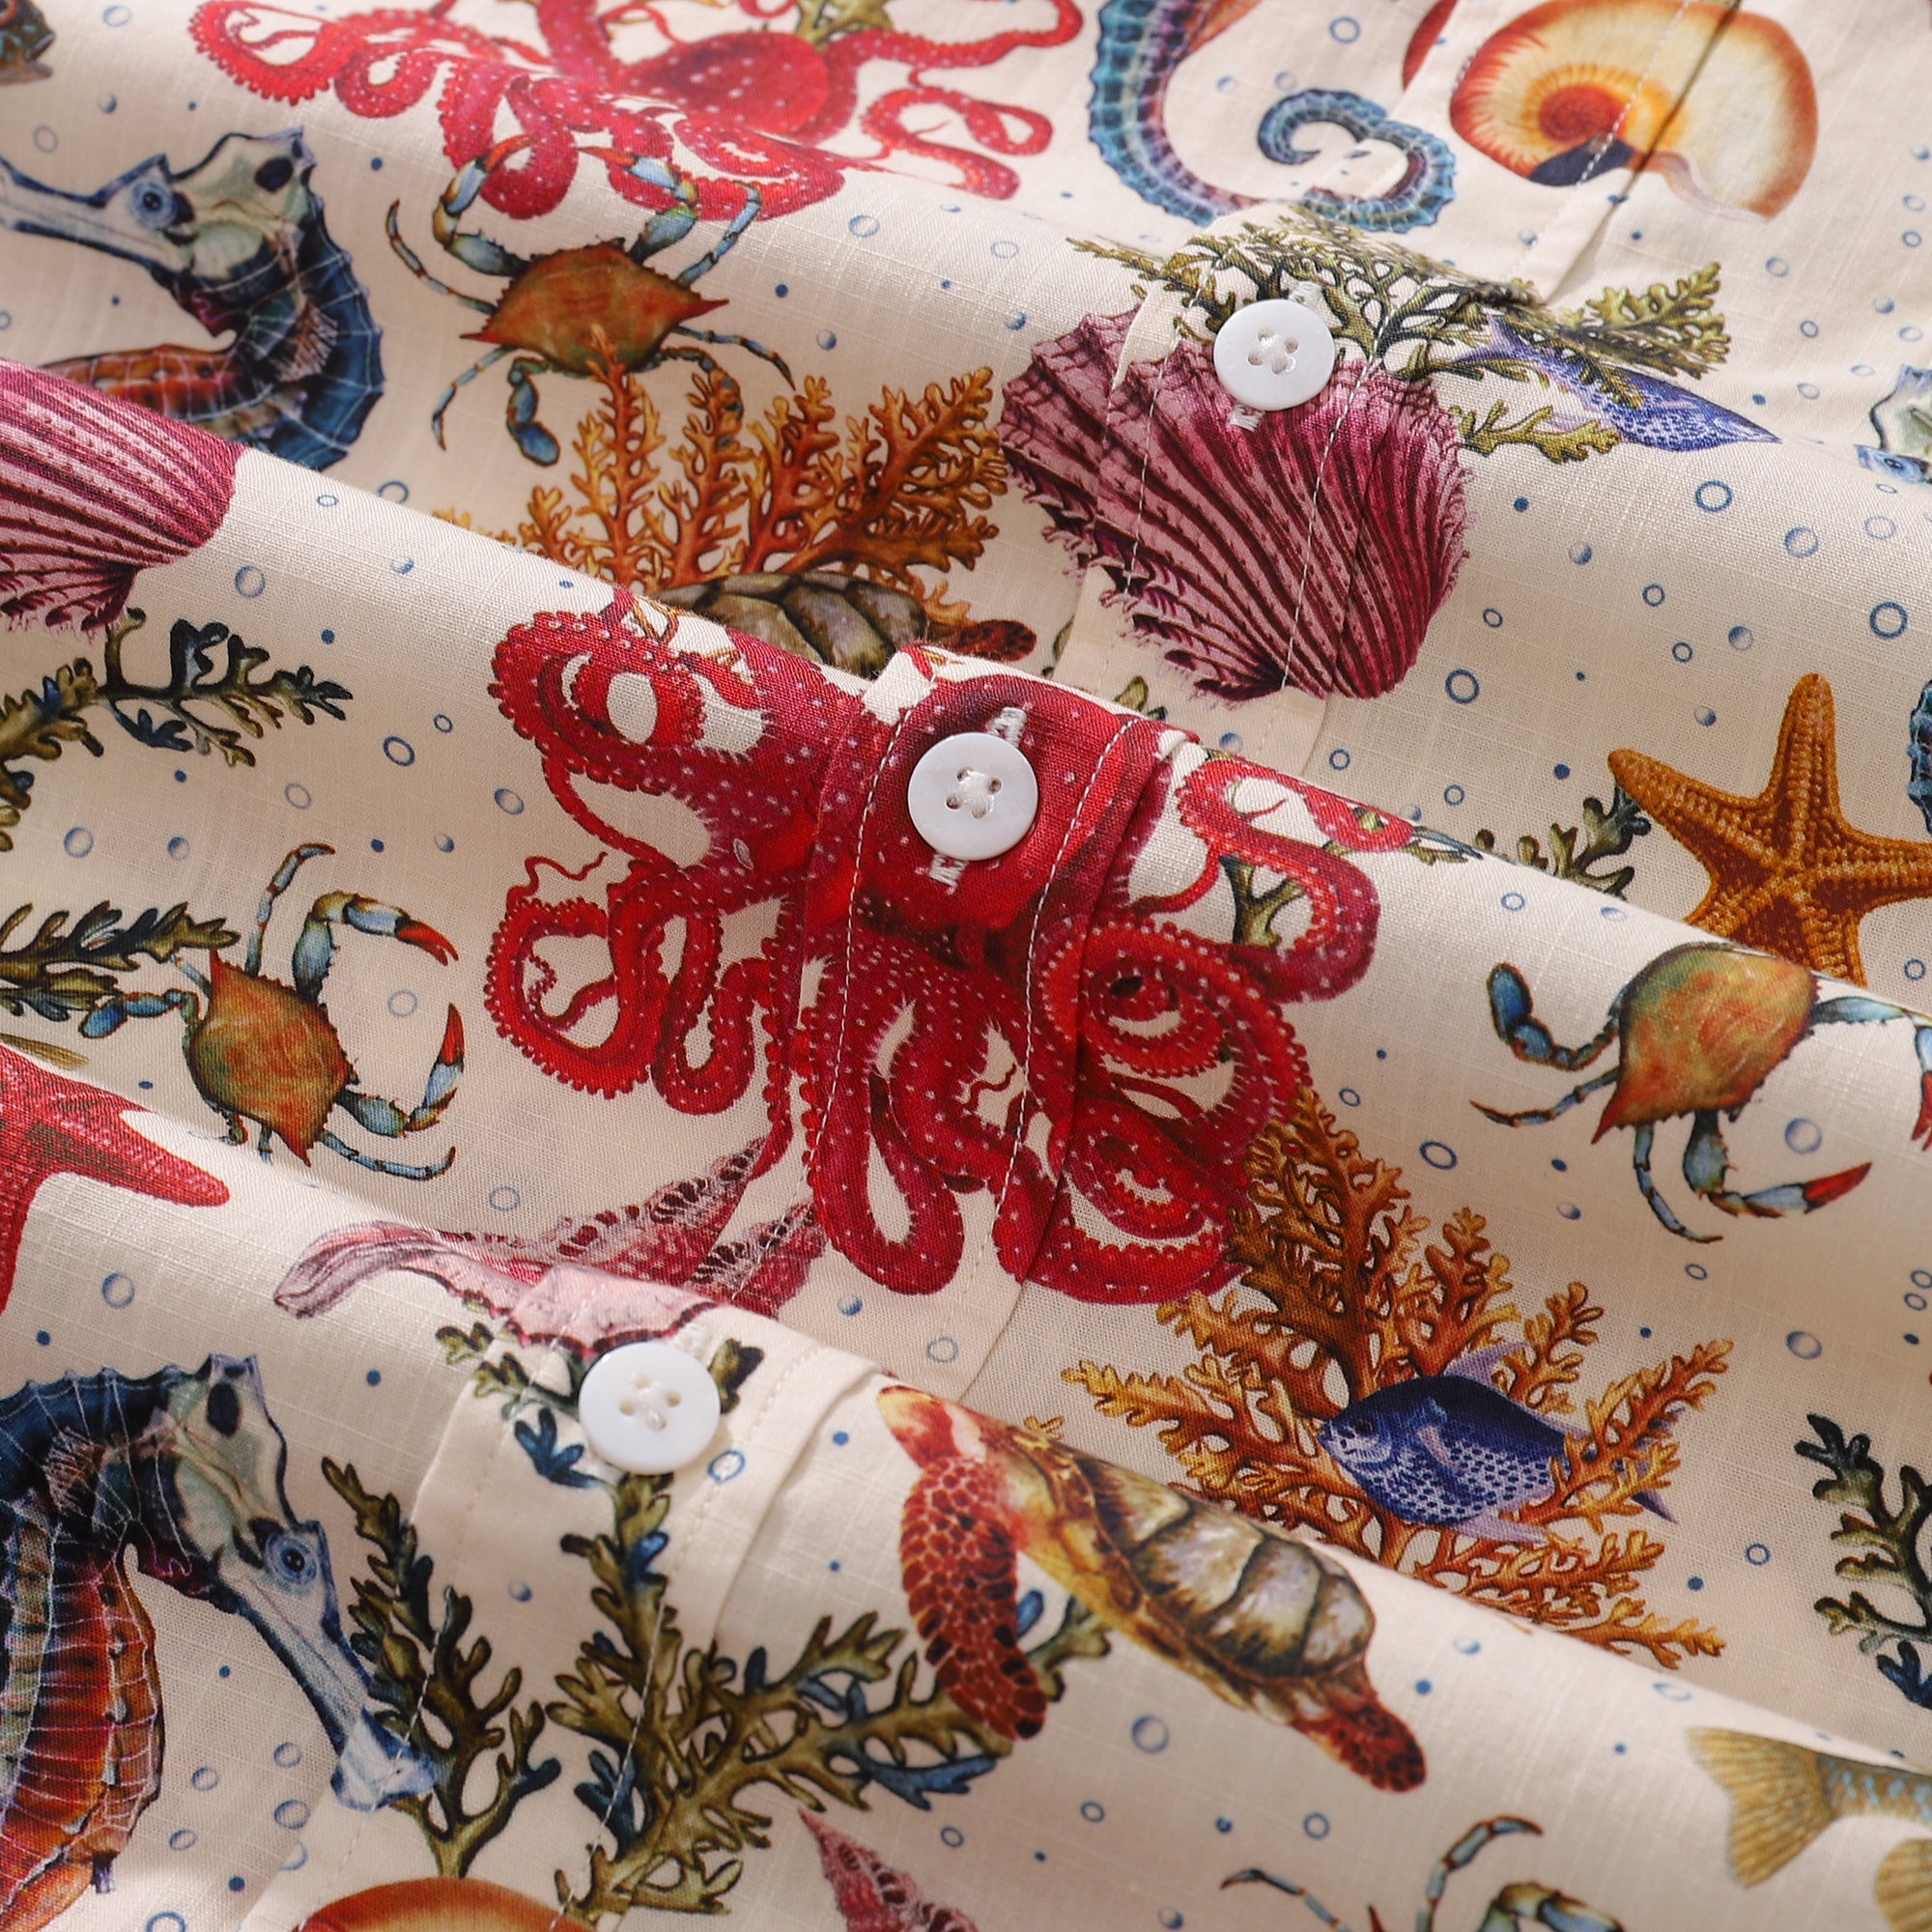 Men's Funky Hawaiian Shirt Marine Life Seahorse Octopus Print-mismatched Cotton Button-down